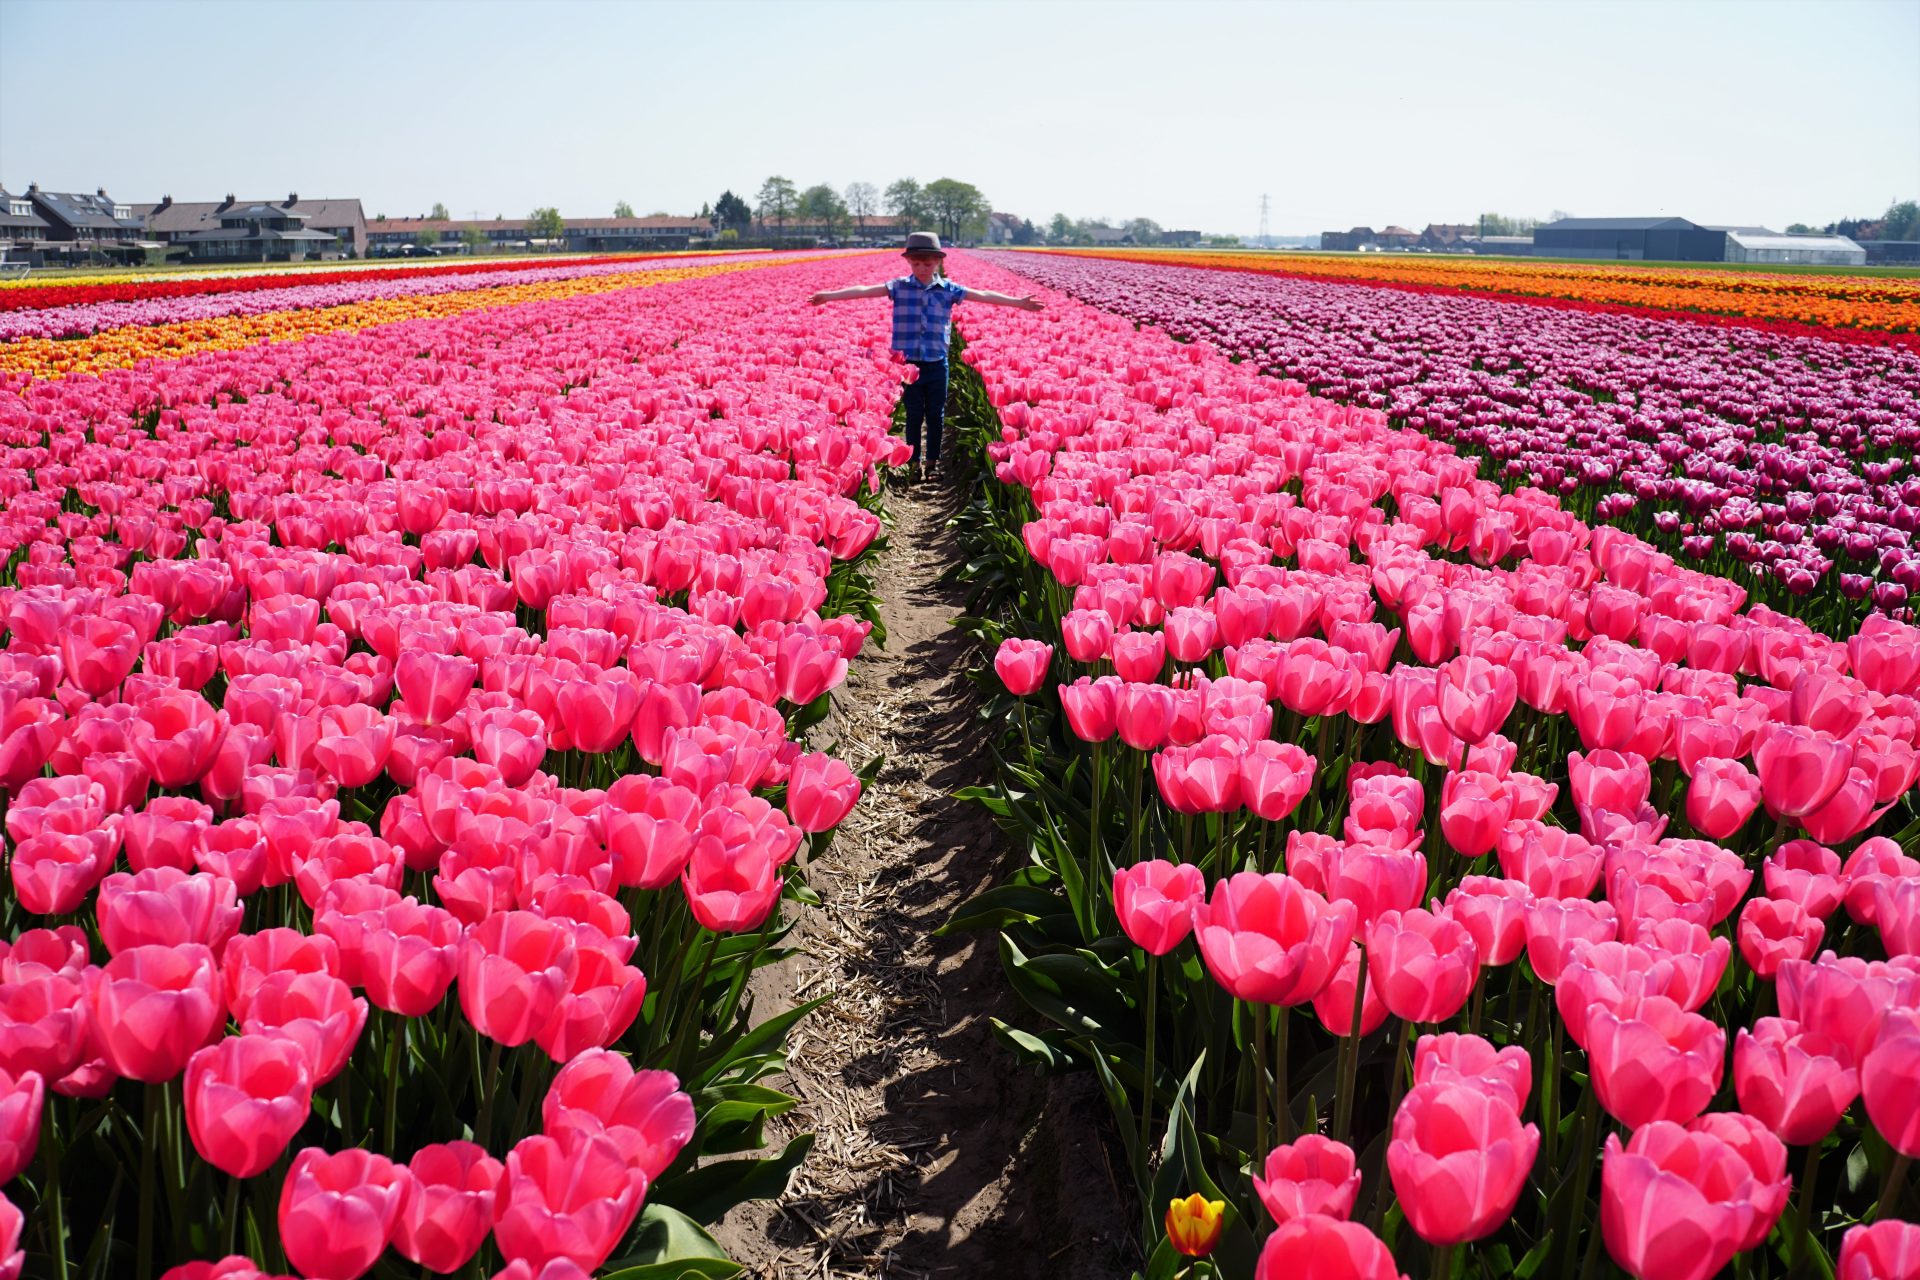 Tip Toeing Through Tulips Fam Flower Farm Little Kid Big City